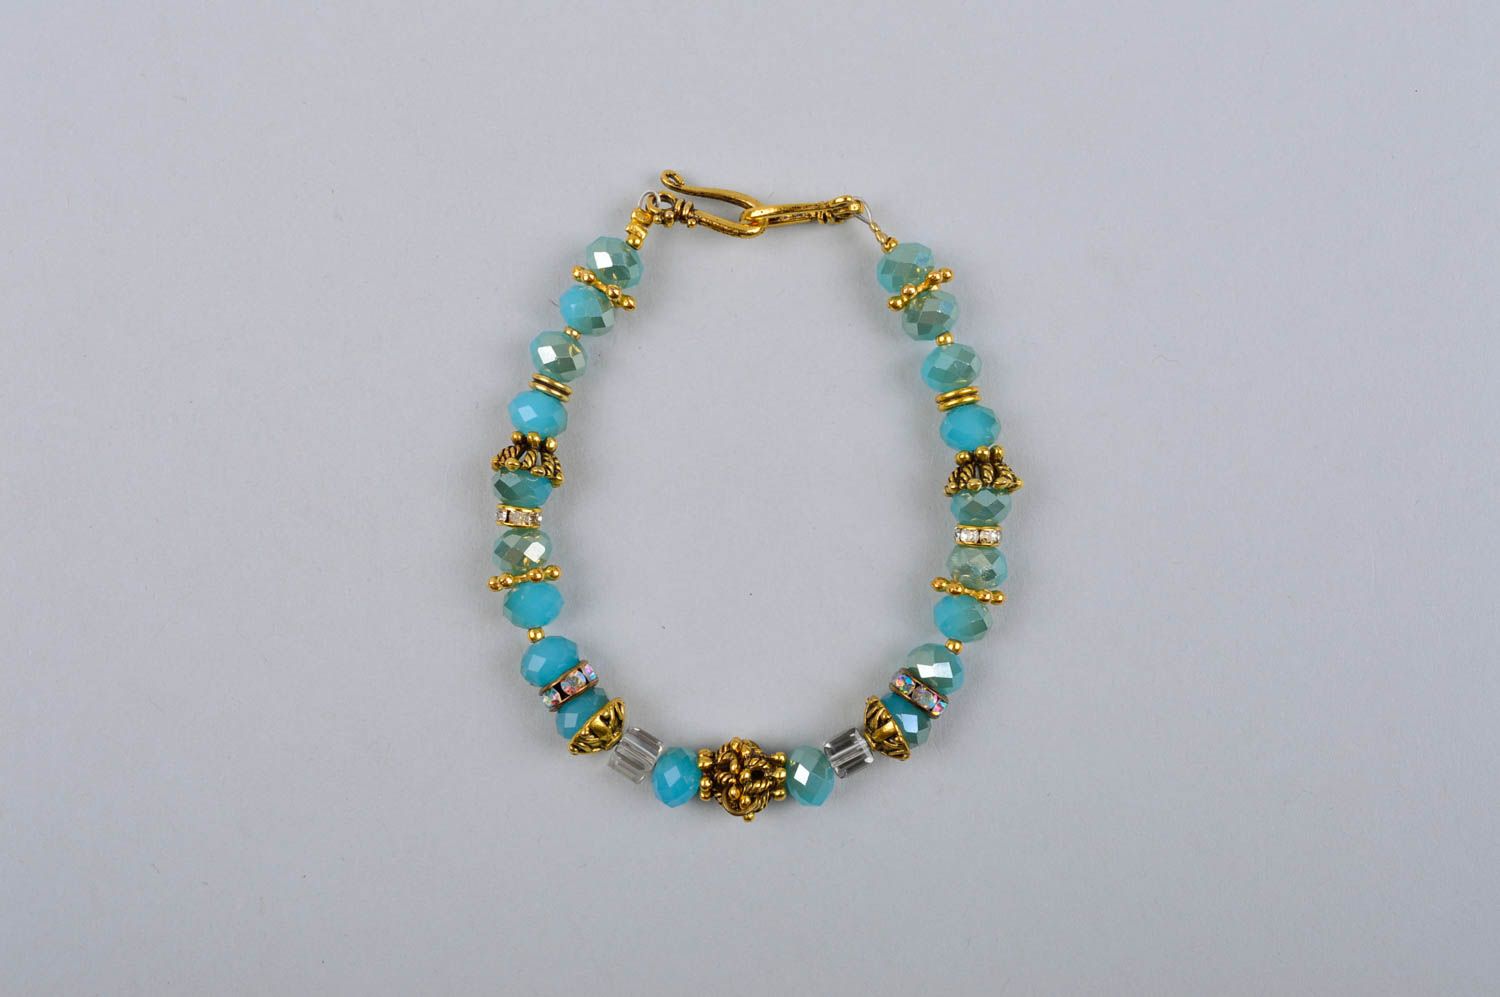 Crystal beads charm bracelet in light blue color for teen girls photo 2